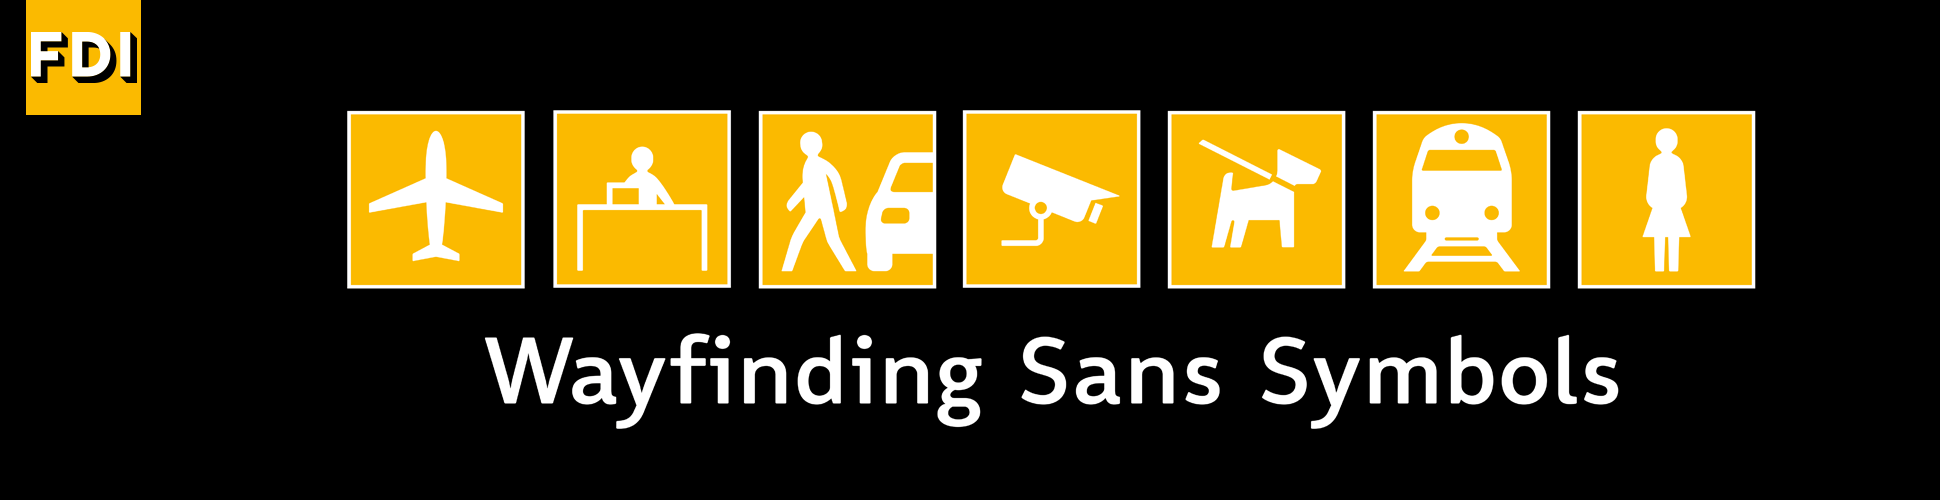 Wayfinding Sans Symbols: the pictogram font for signs